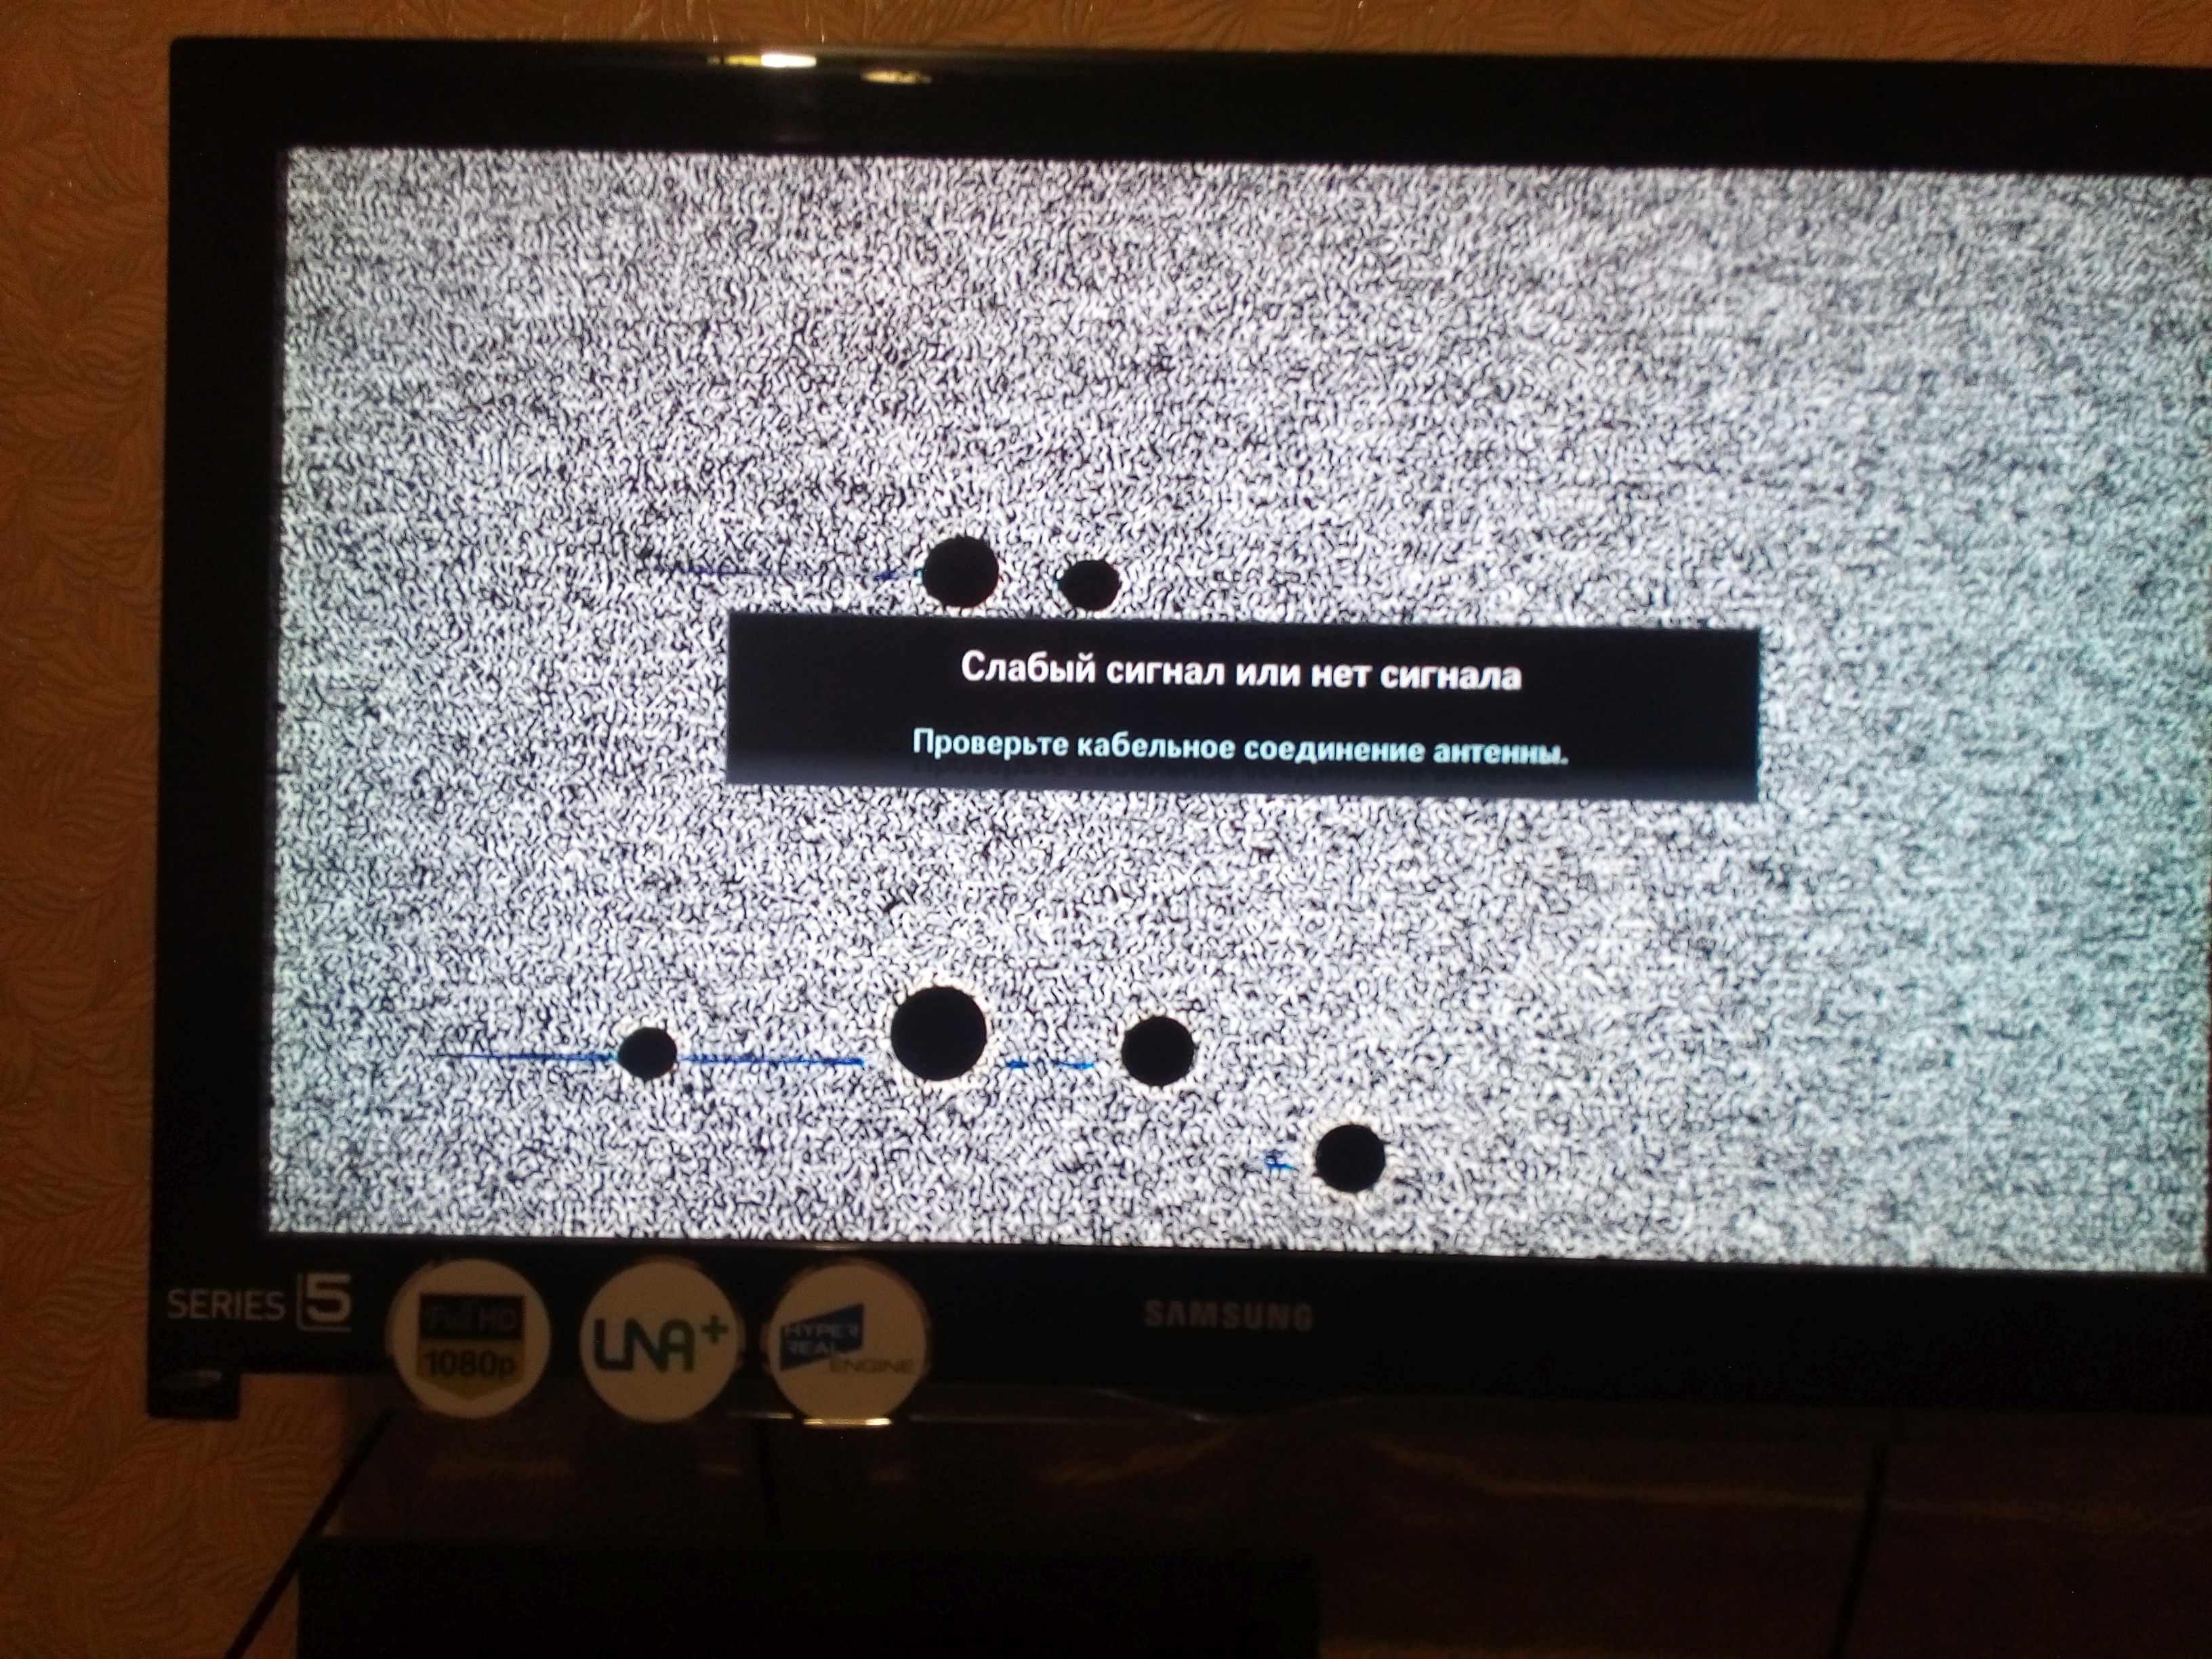 Телевизор самсунг белые пятна. Черные пятна на матрице телевизора самсунг. Телевизор самсунг темные пятна на экране. Чёрное пятно на экране телевизора самсунг. Черная точка на экране телевизора.